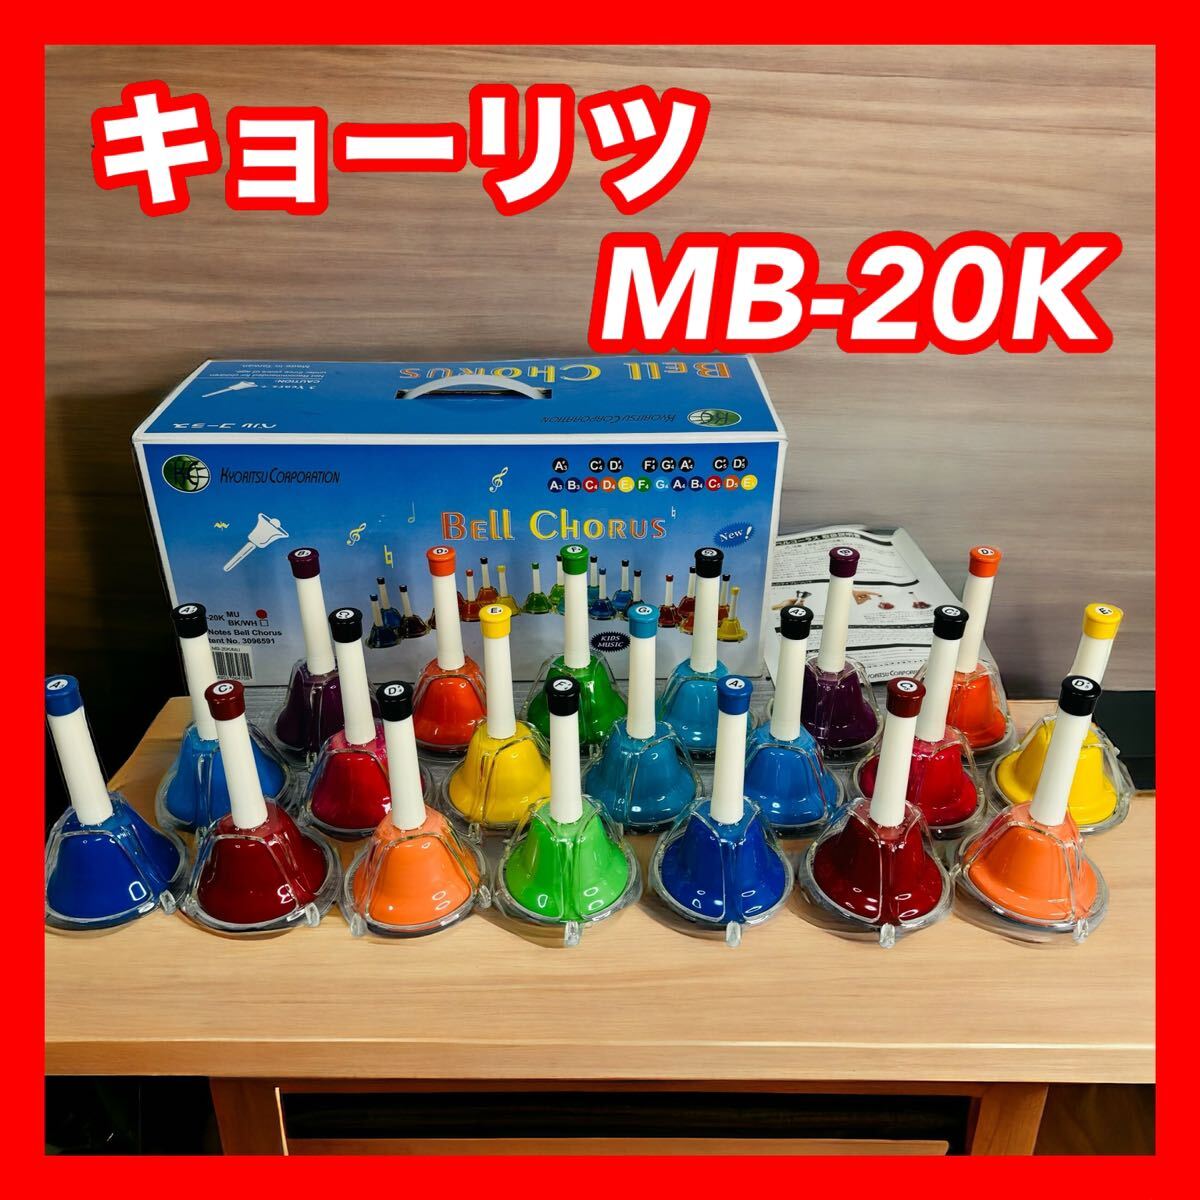 KCkyo-litsuMB-20K колокольчик 20 звук bell Chorus 